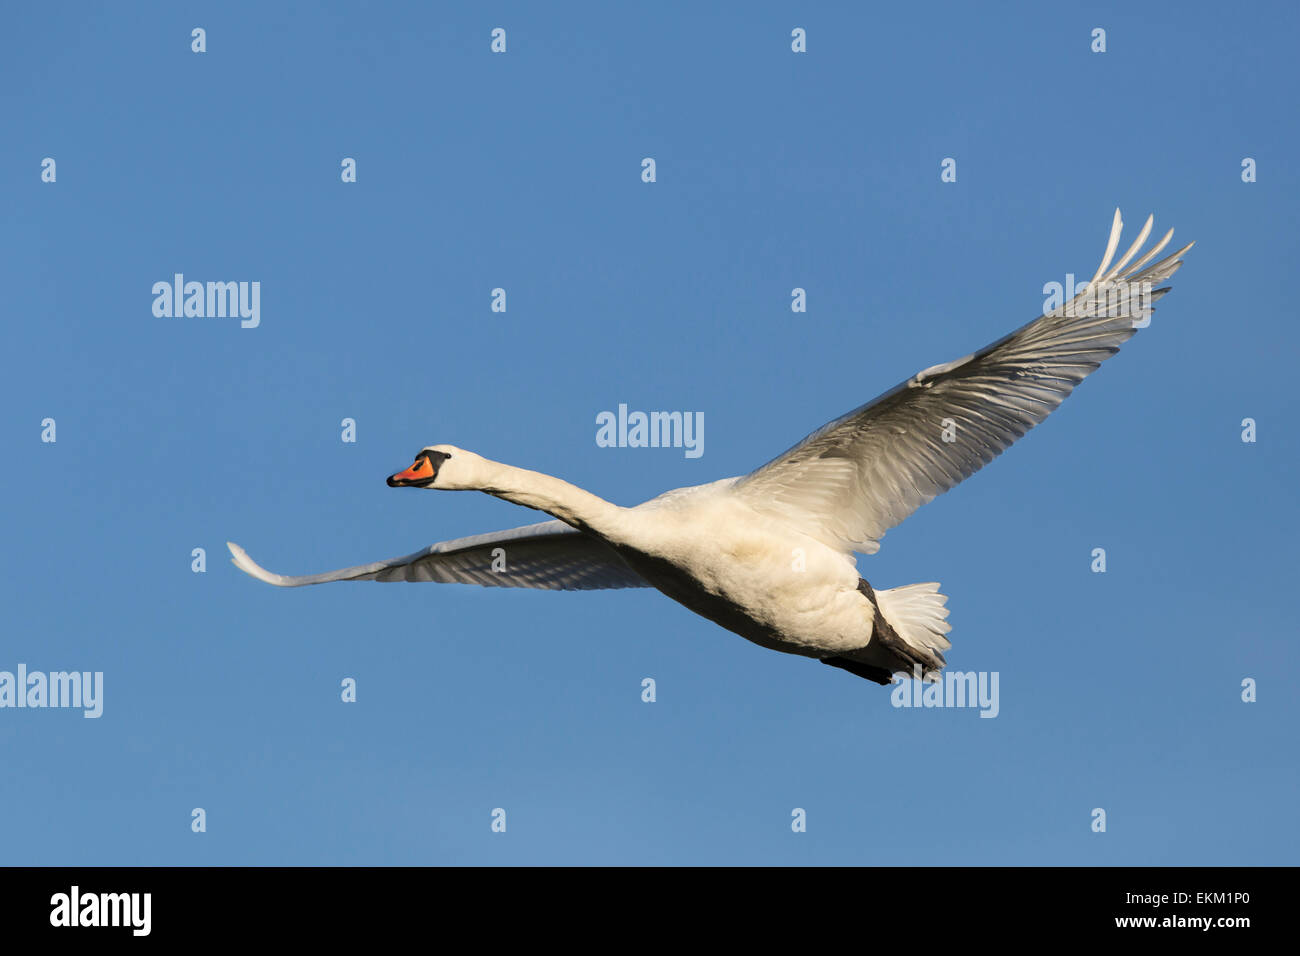 White swan / Cygnus olor Stock Photo